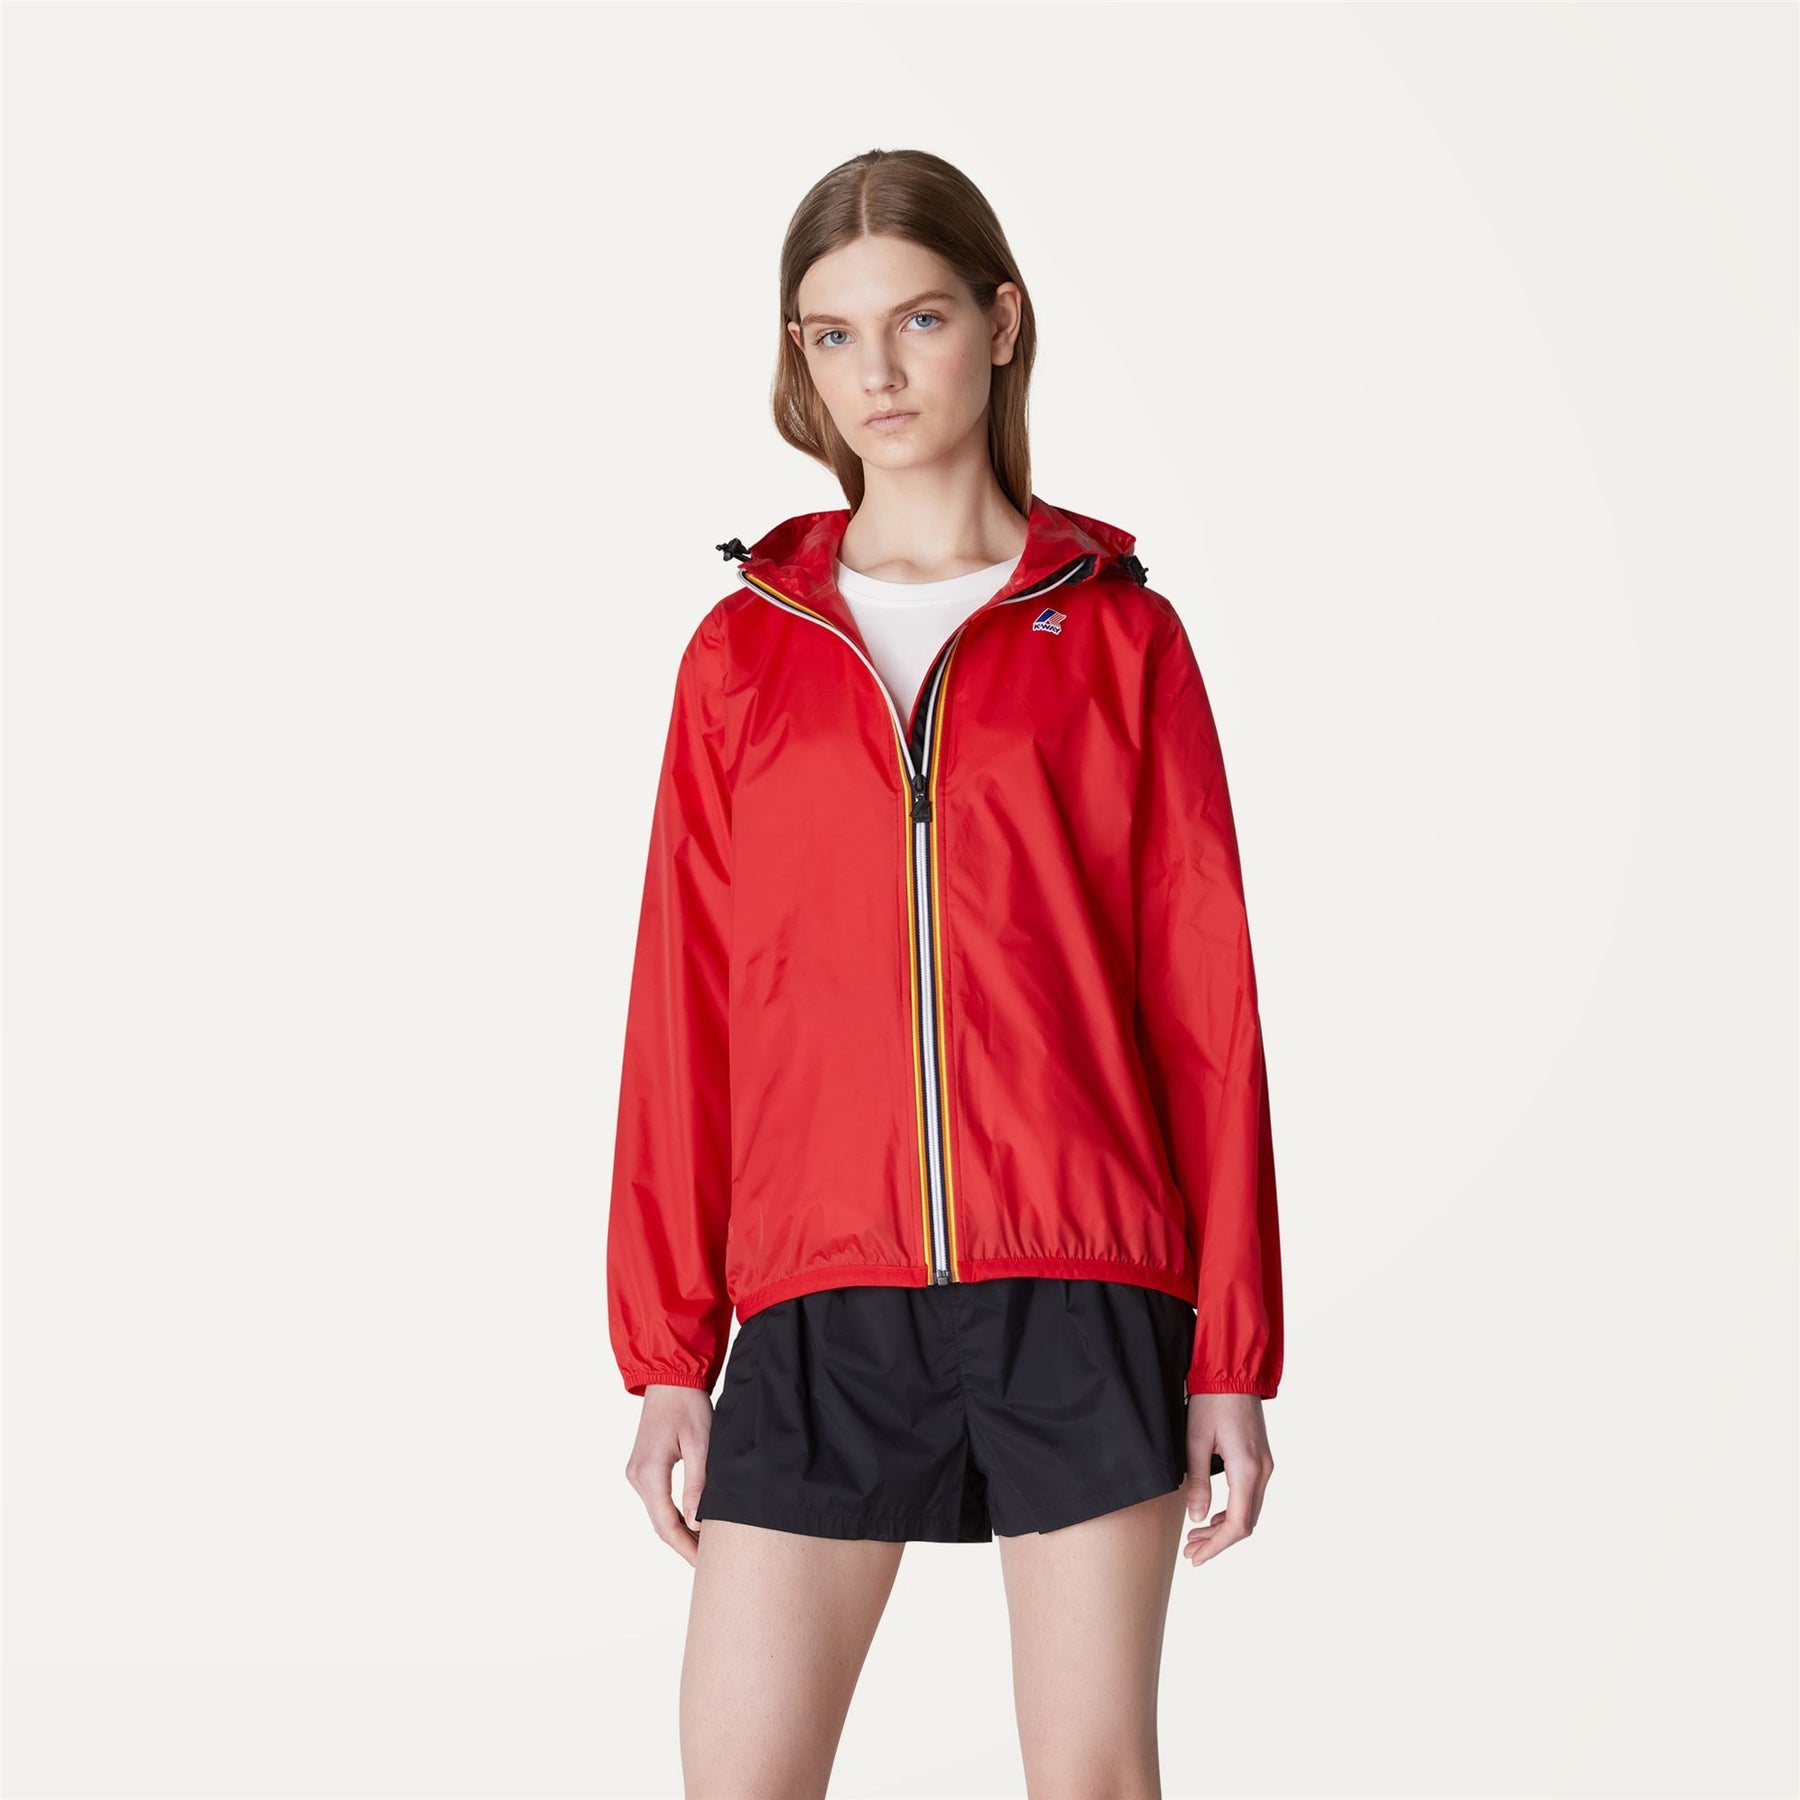 Claude - Unisex Packable Full Zip Waterproof  Rain Jacket in Red